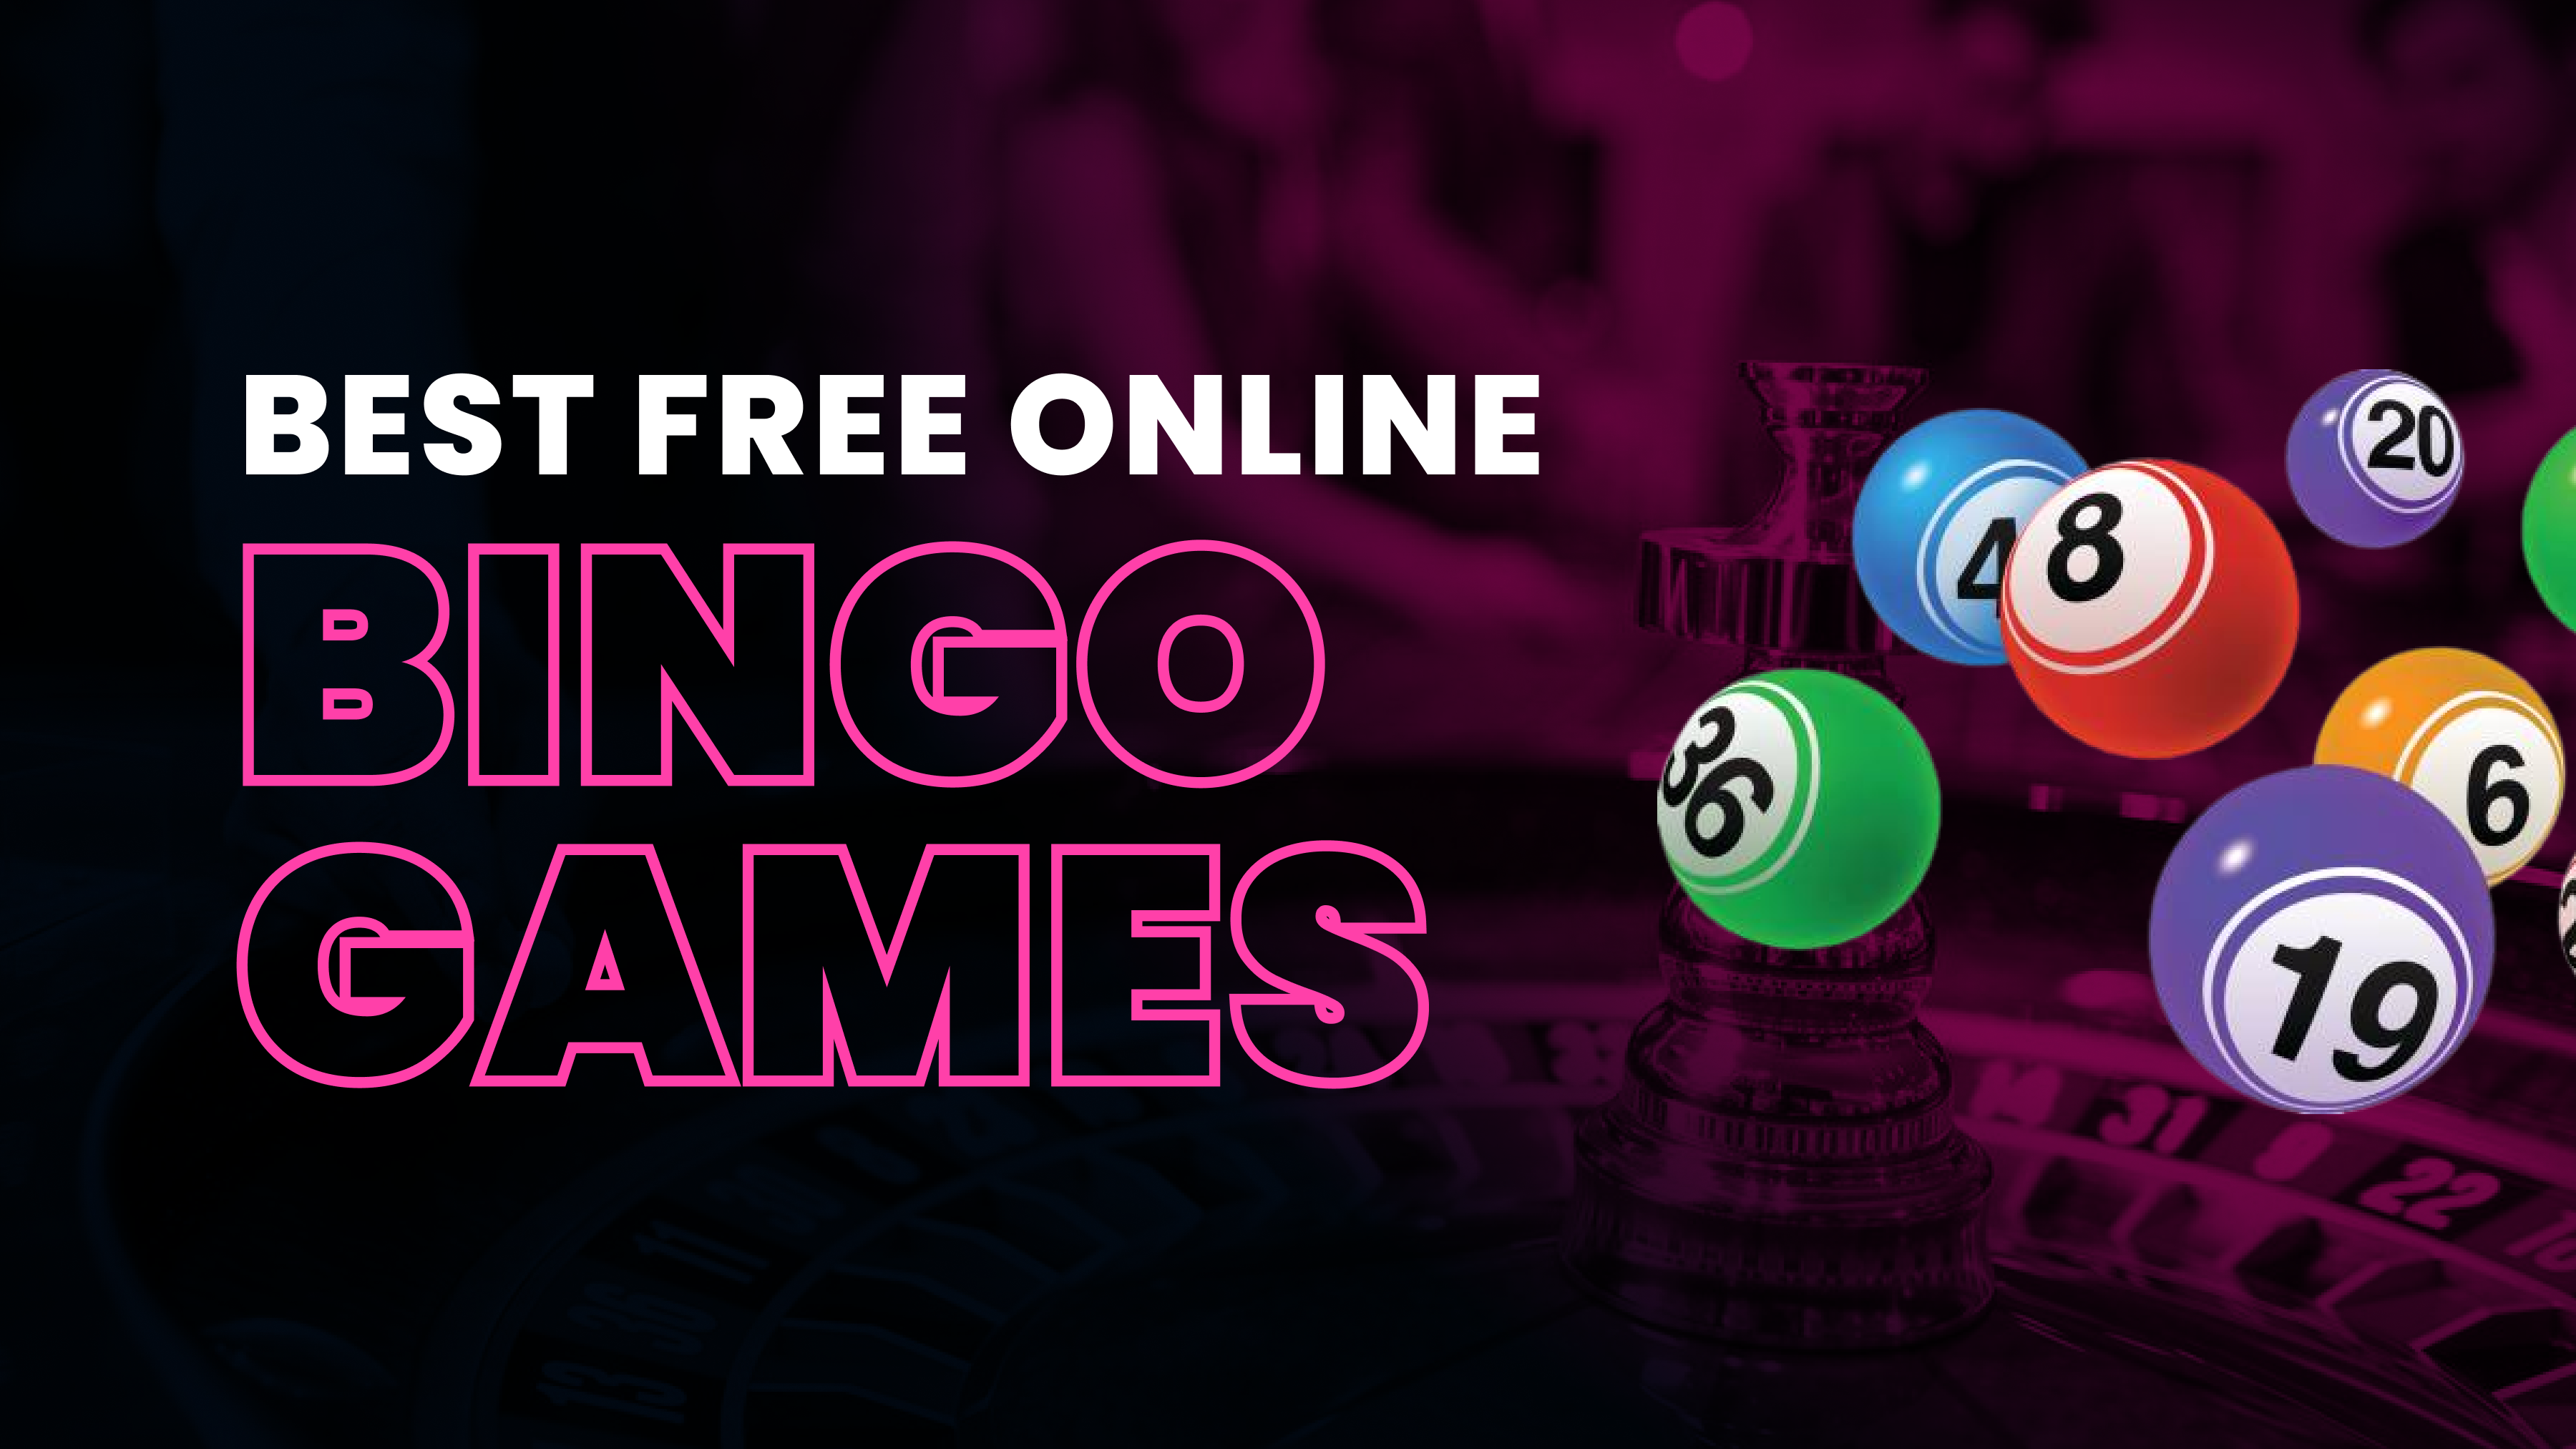 Best Free Bingo Games Online Header Image